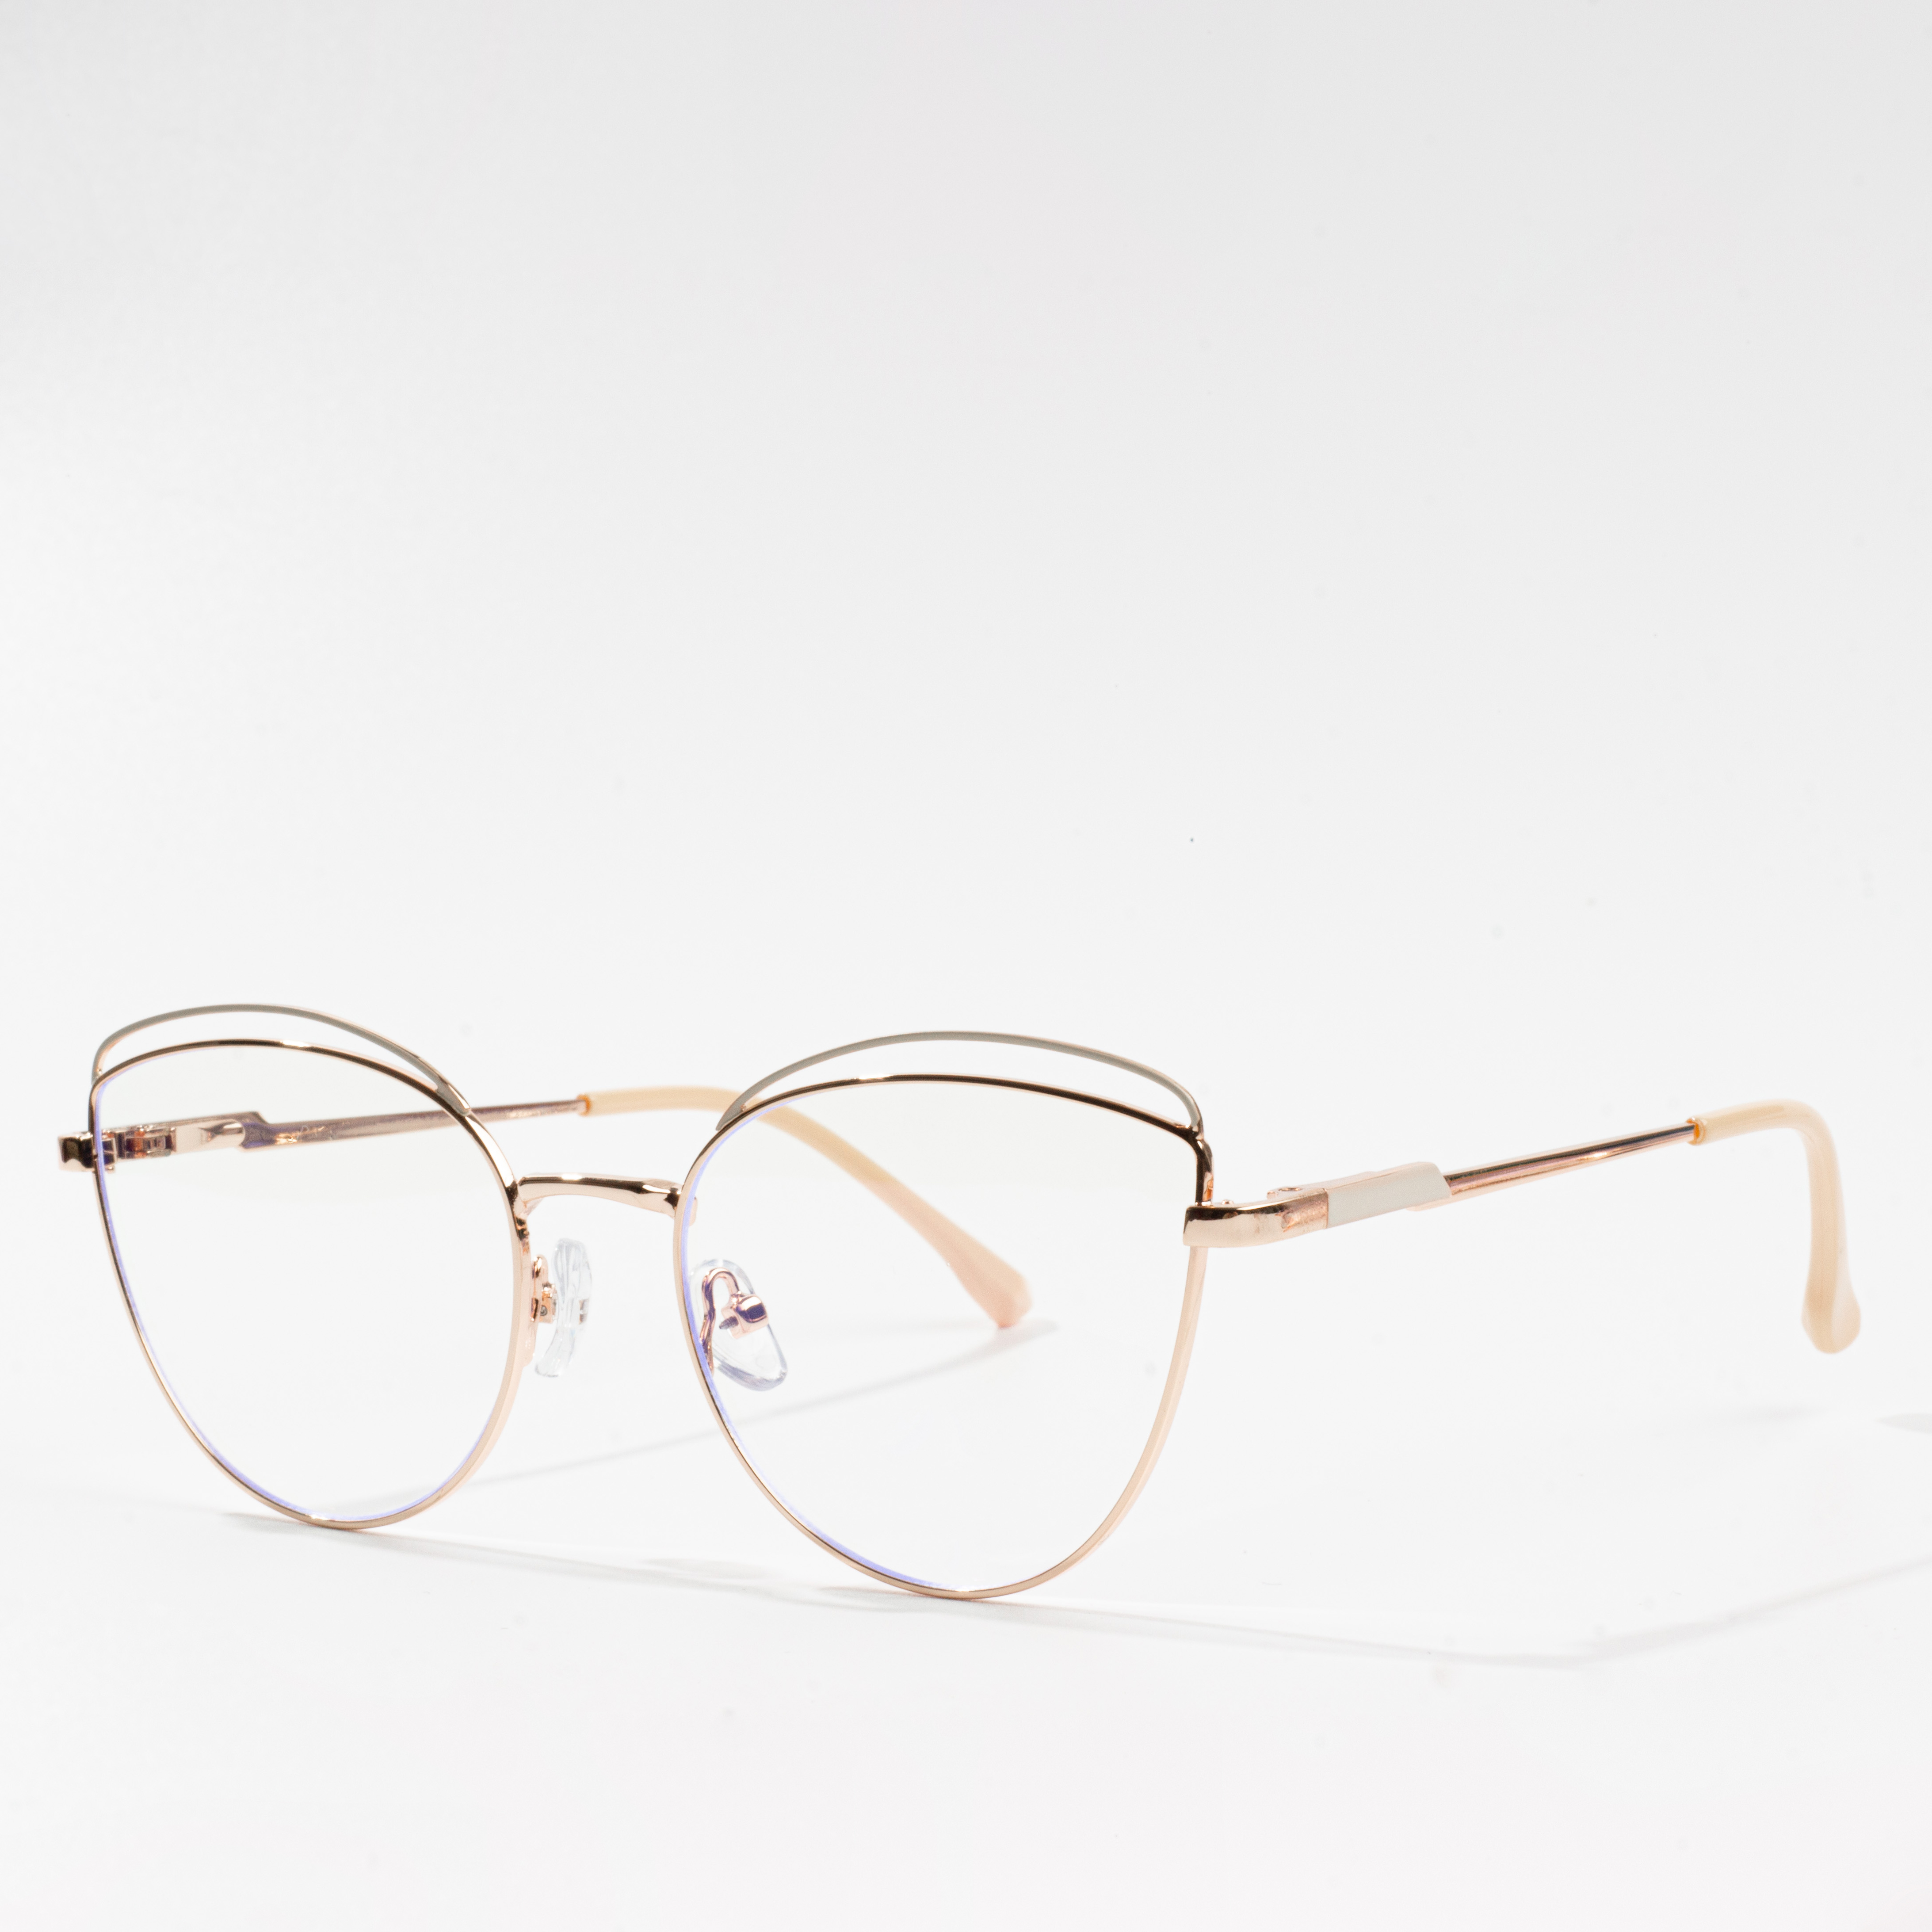 stylish brille frames